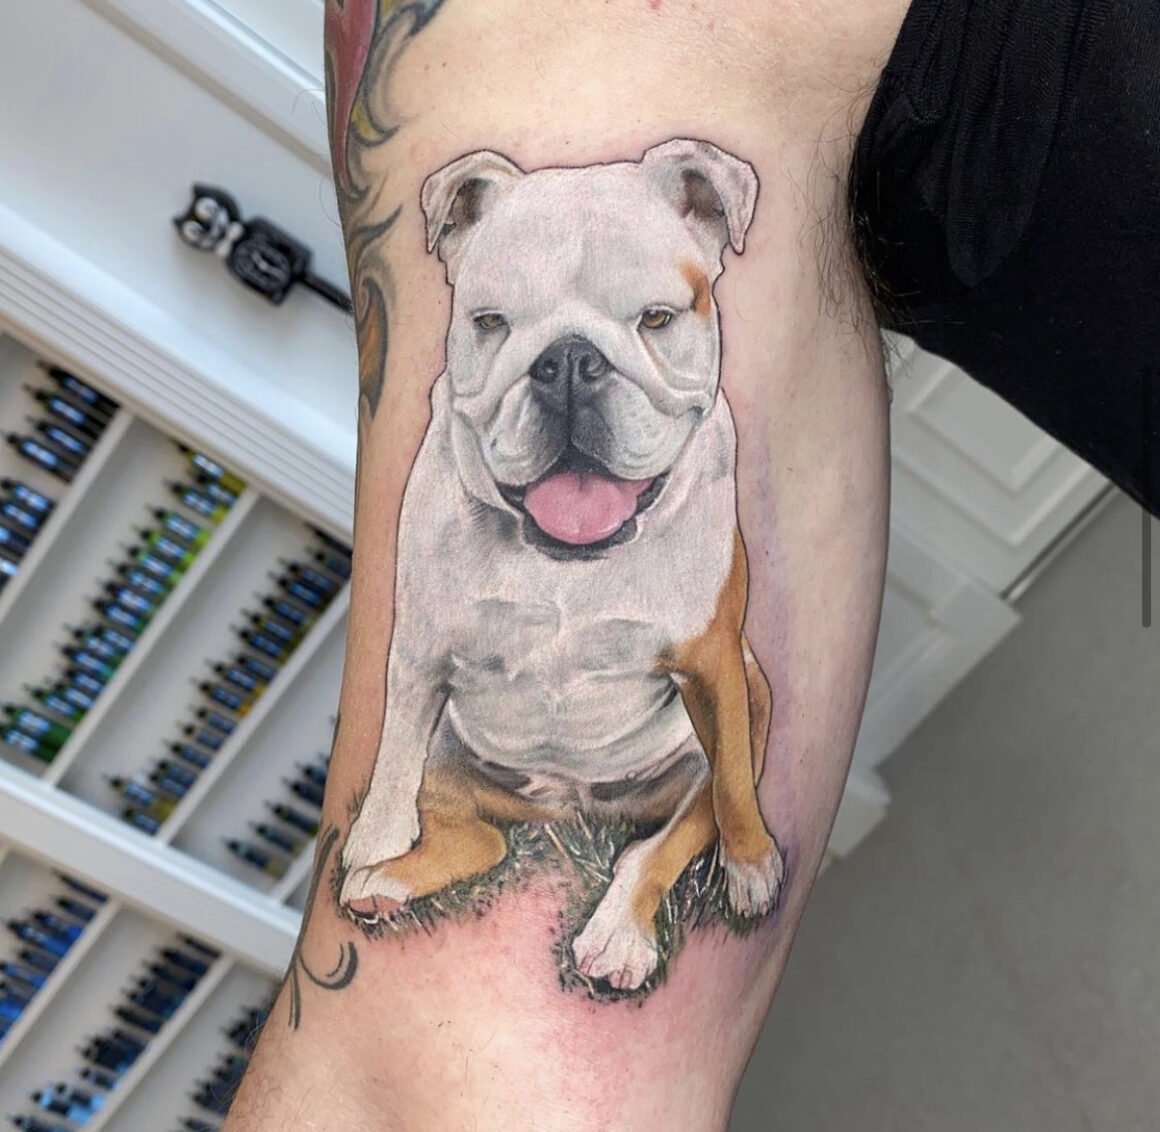 Bulldog Tattoos: history, meanings and ideas - Tattoo Life